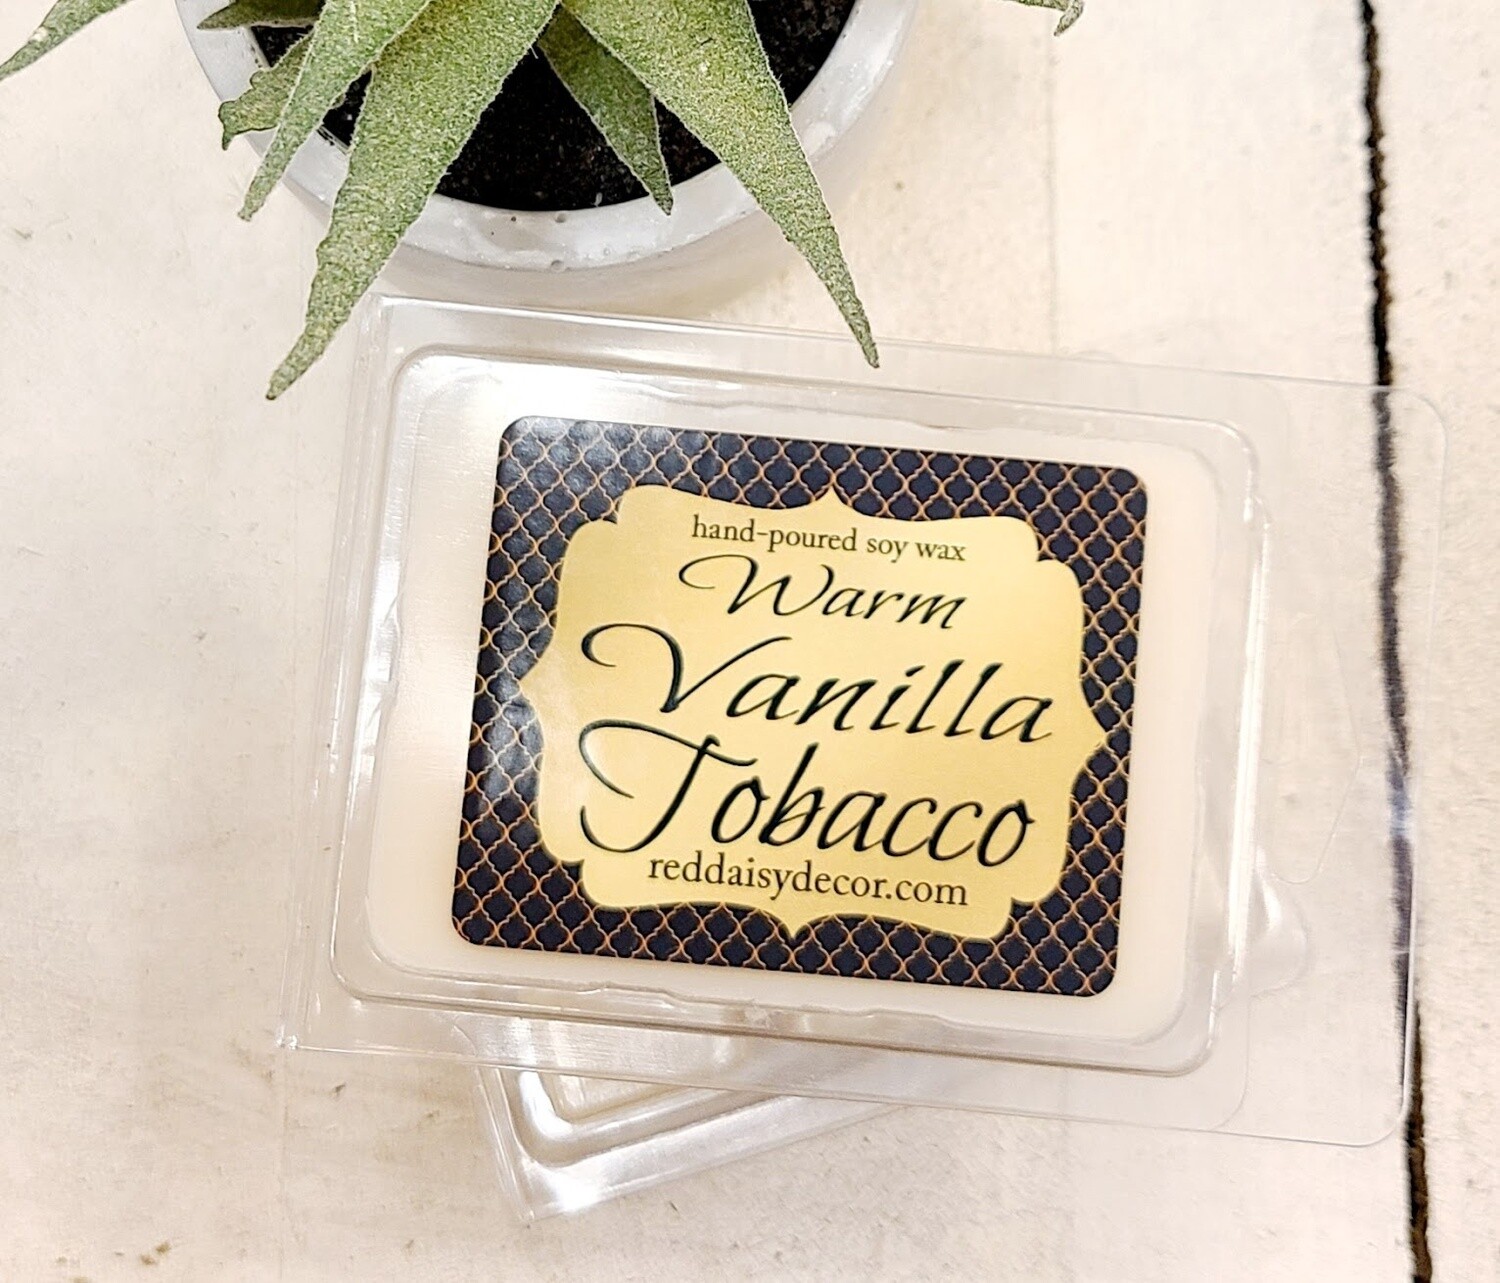 Soy Blend Wax Melts - Tobacco Vanilla